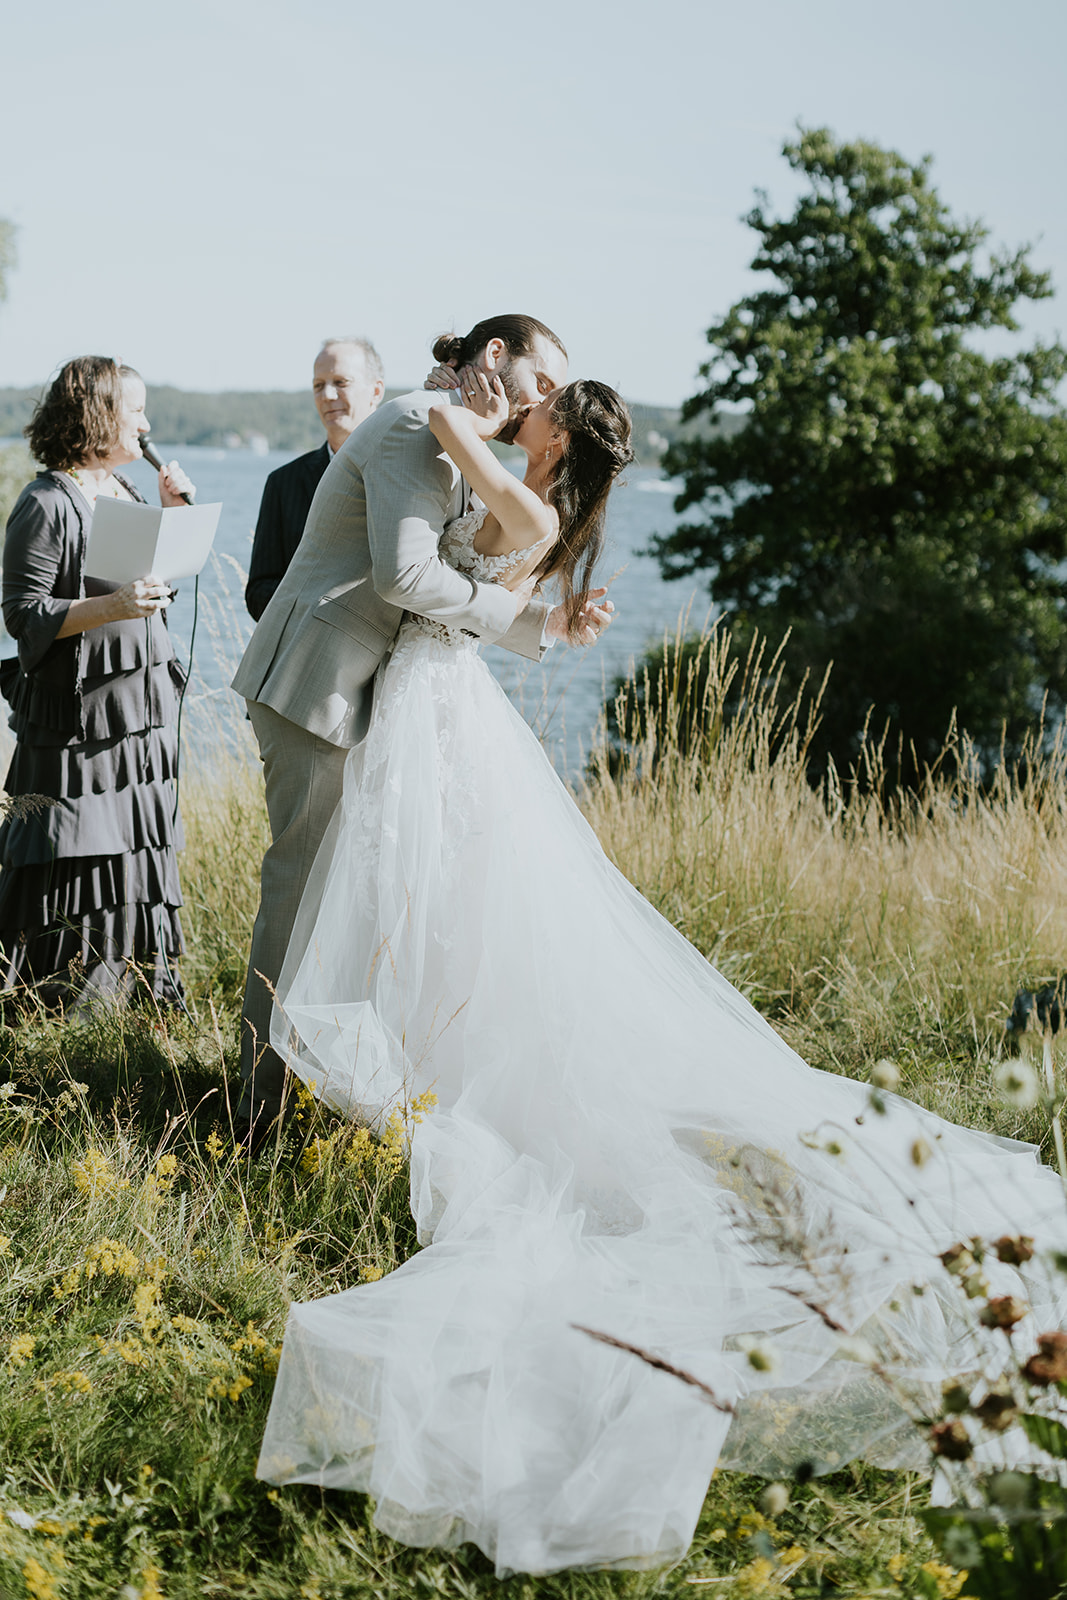 Best wedding photographer in Stockholm